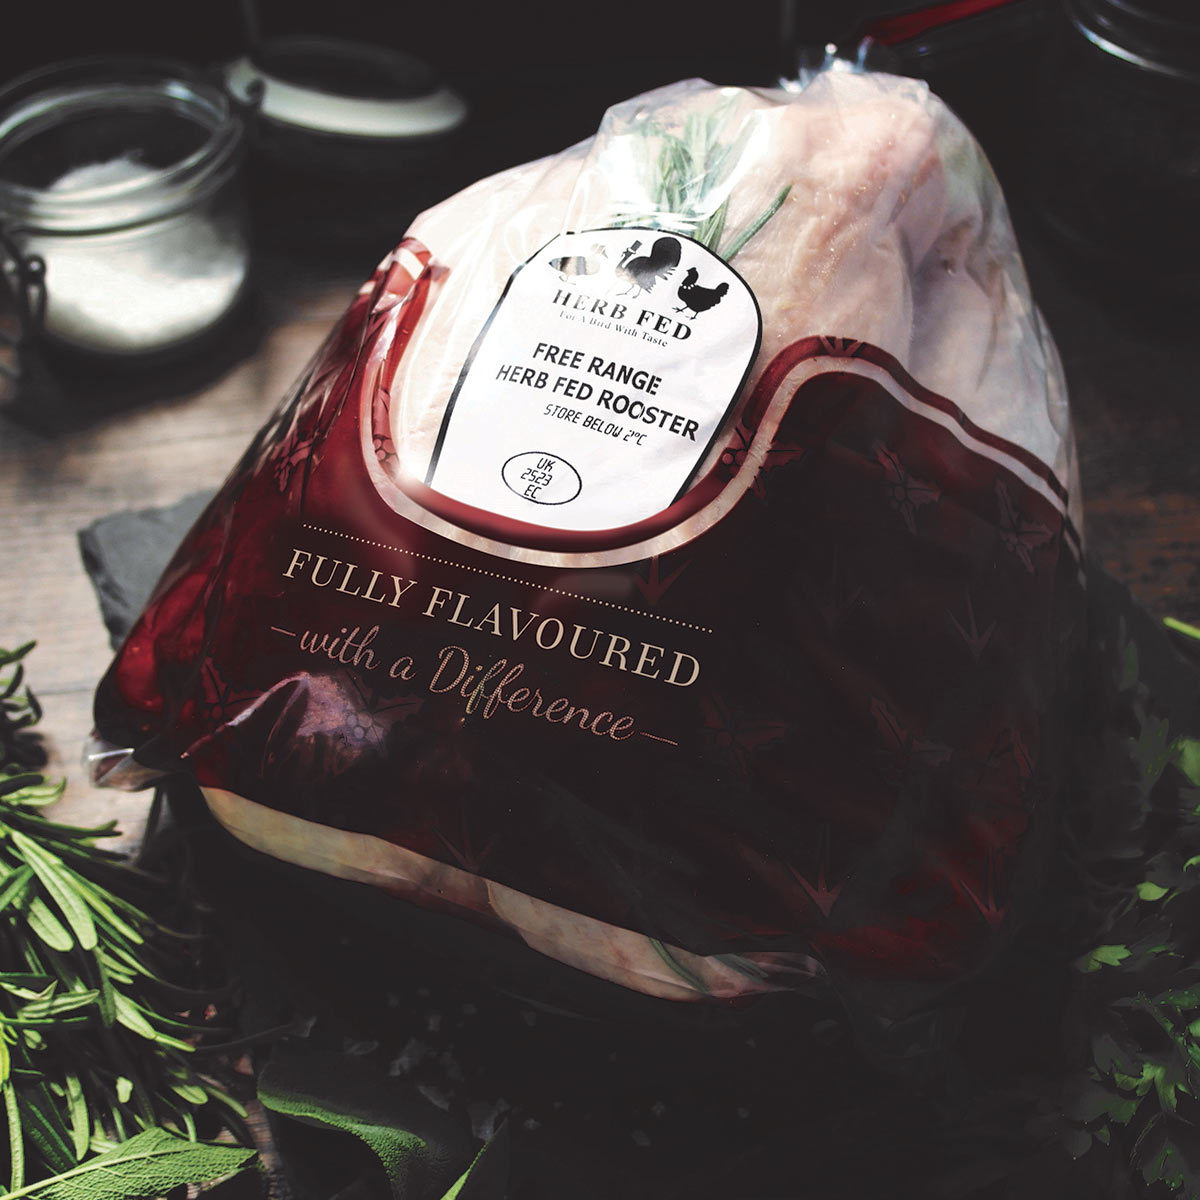 Raw turkey in its Herb Fed Packaging